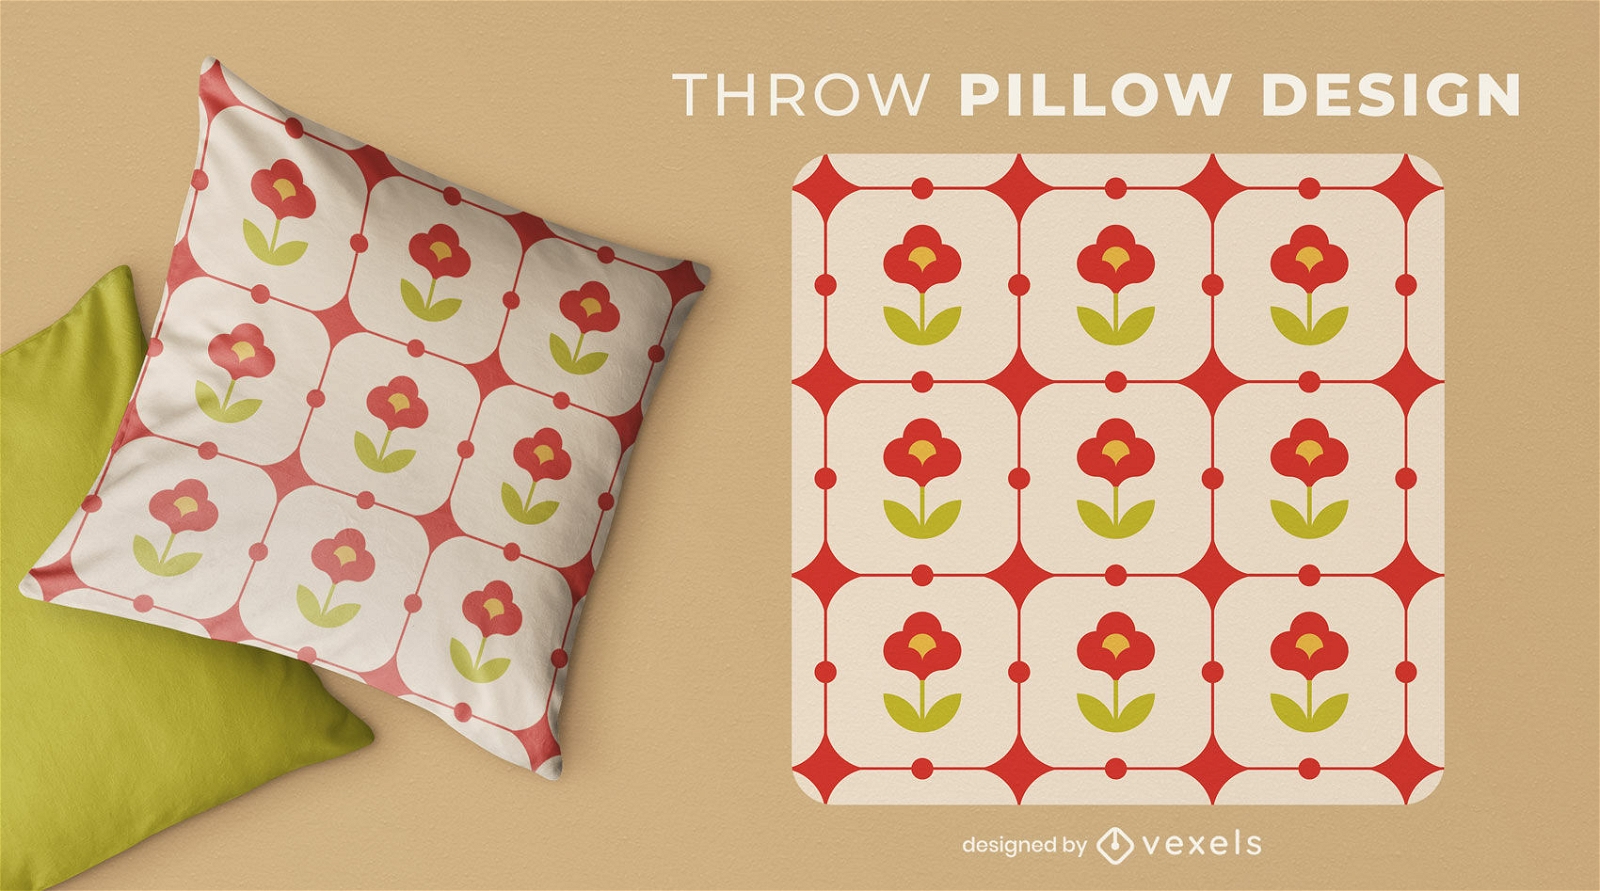 Diseño de almohada con temática floral.